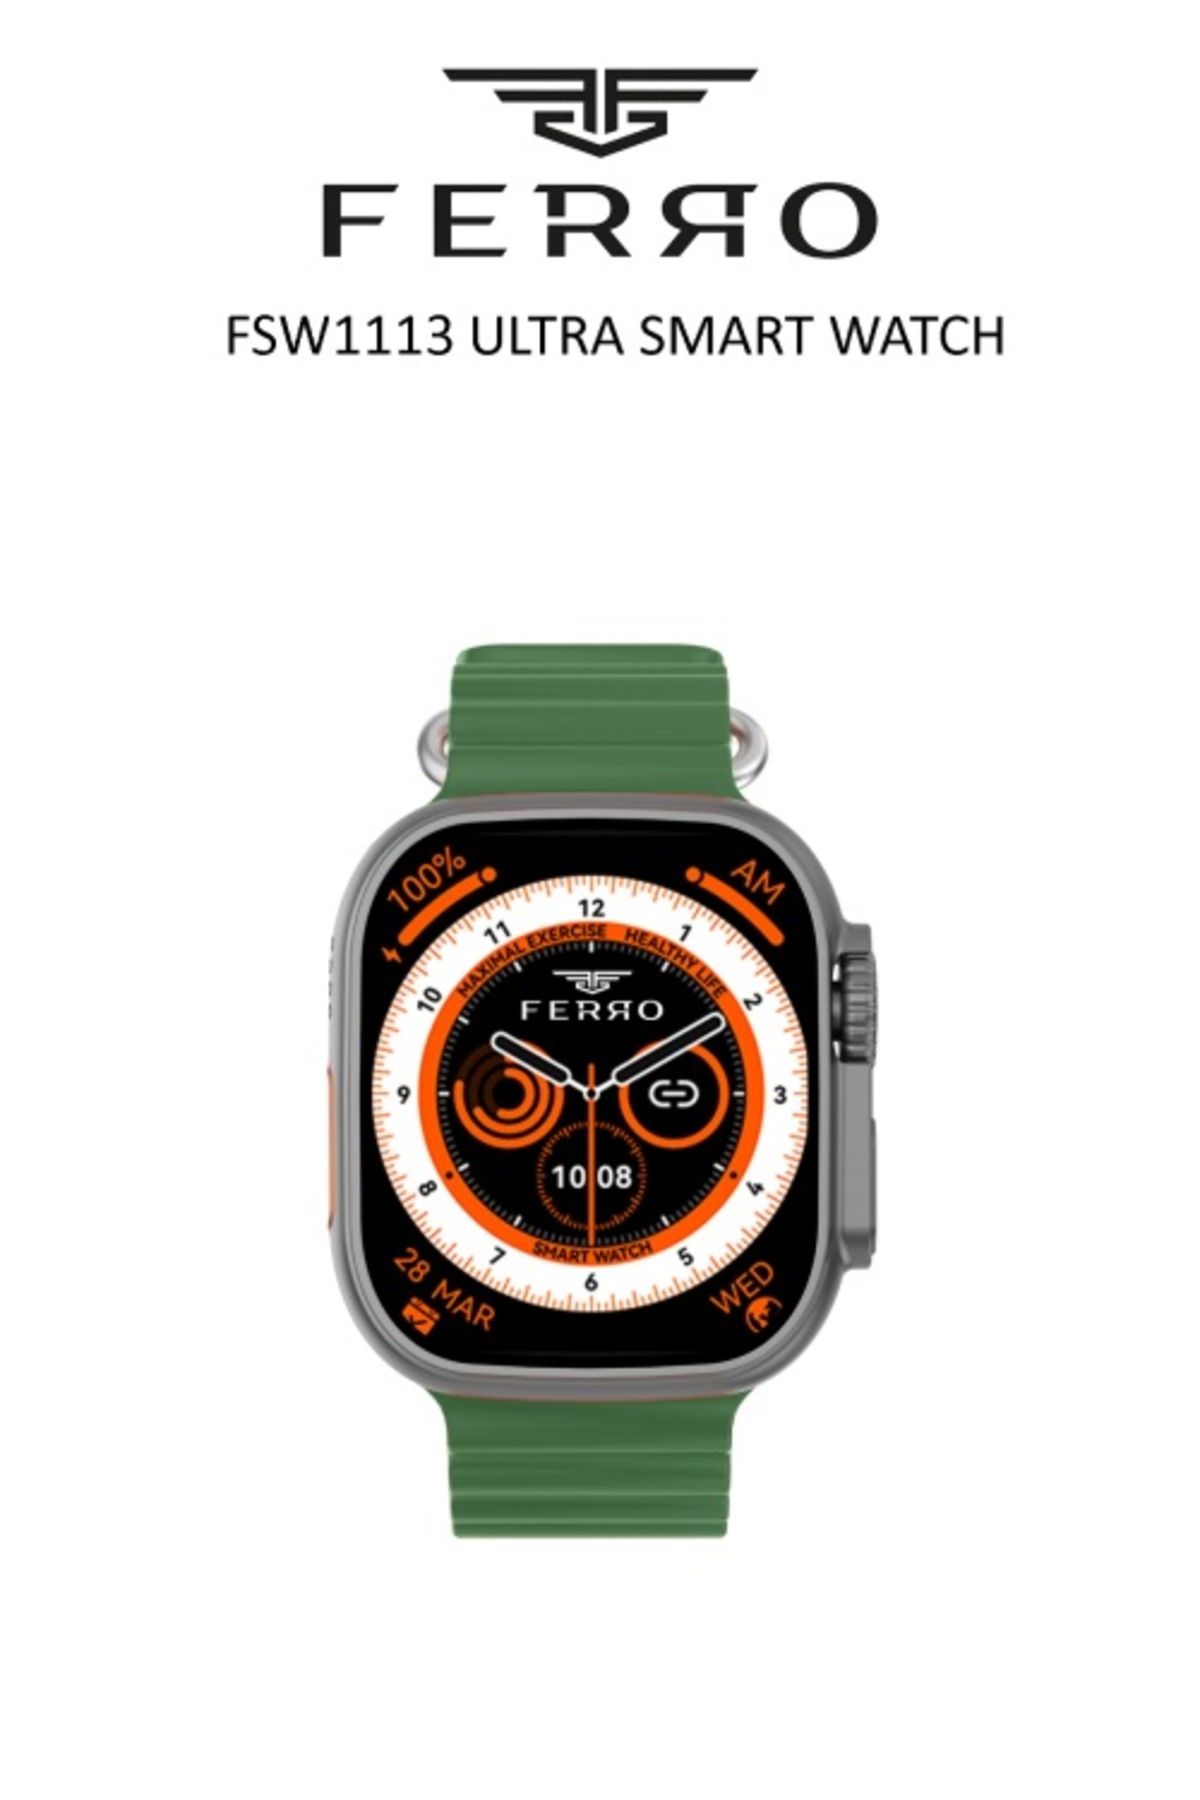 FERRO Ultra Android Ve Ios Uyumlu Akıllı Saat Fsw1113-gy